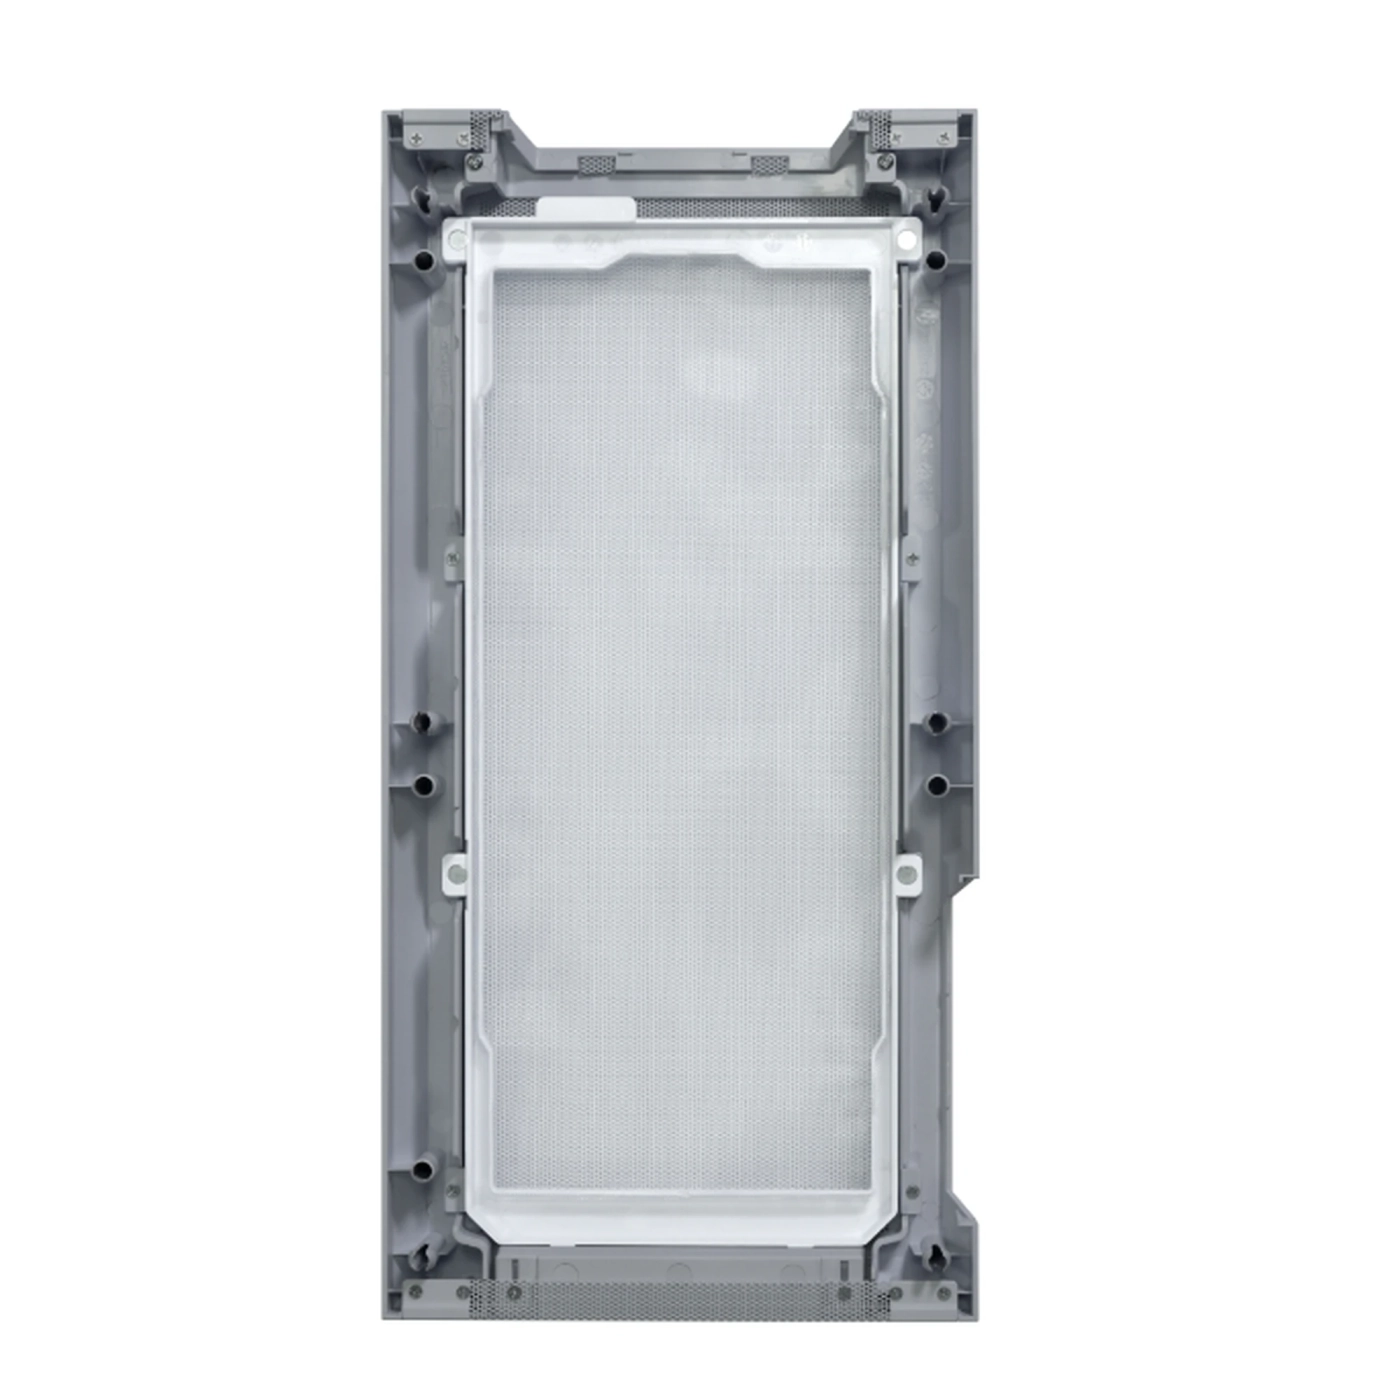 Купить Пылевой фильтр для ПК Lian Li Front Dust Filter White (G89.LAN216-2W.00) - фото 2